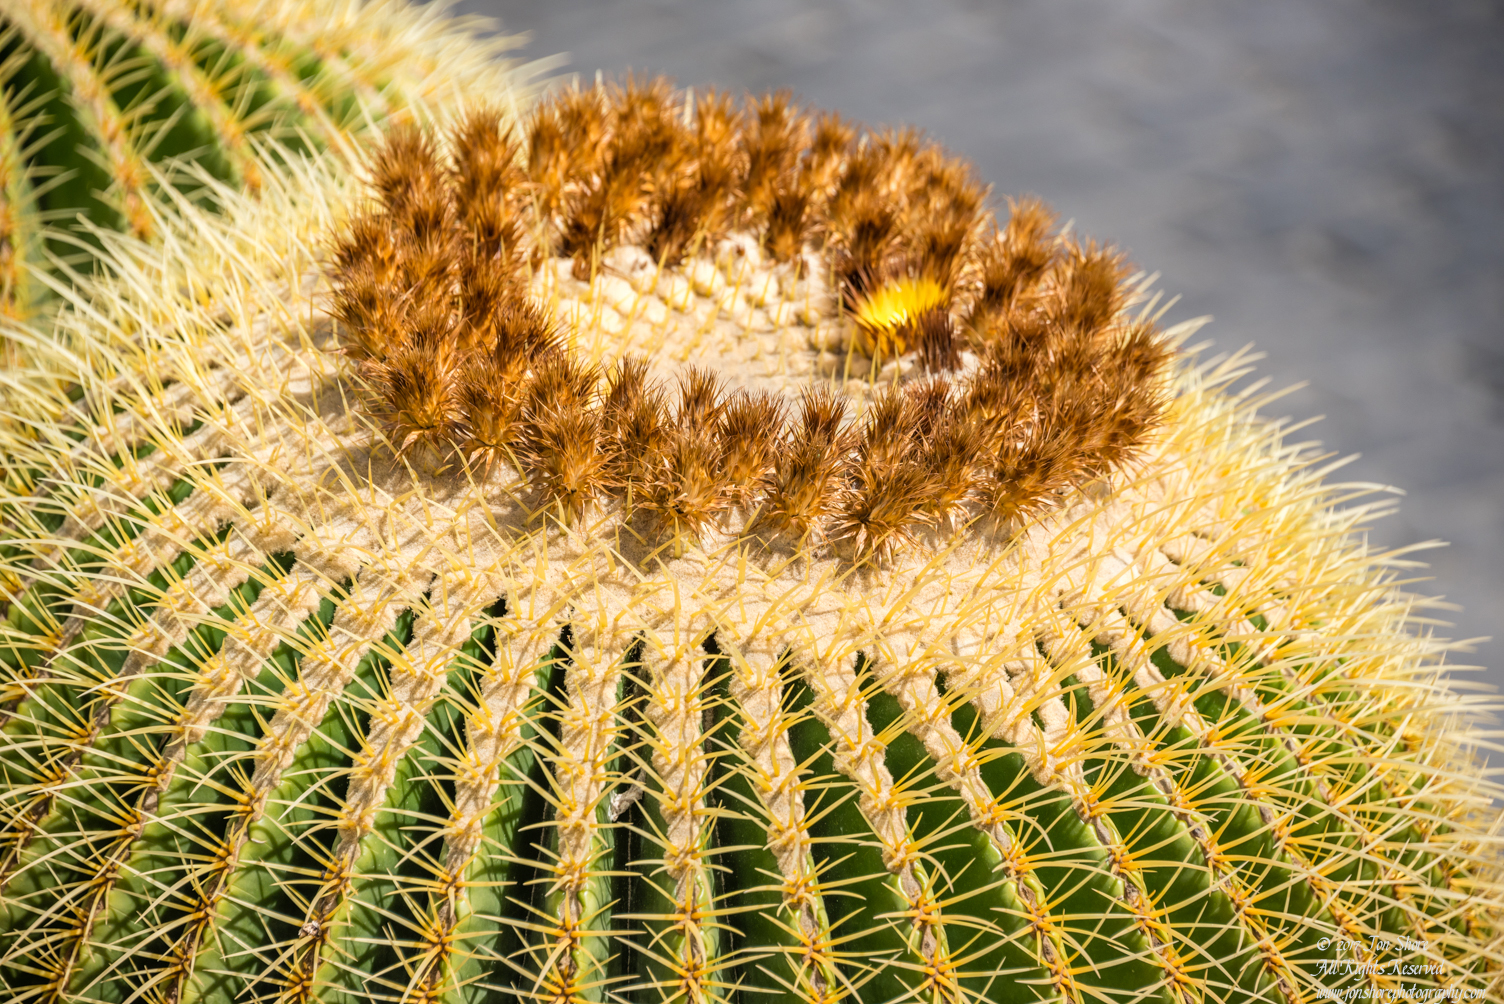 Barrel Cactus Gran Canaria. Nikkor 200mm